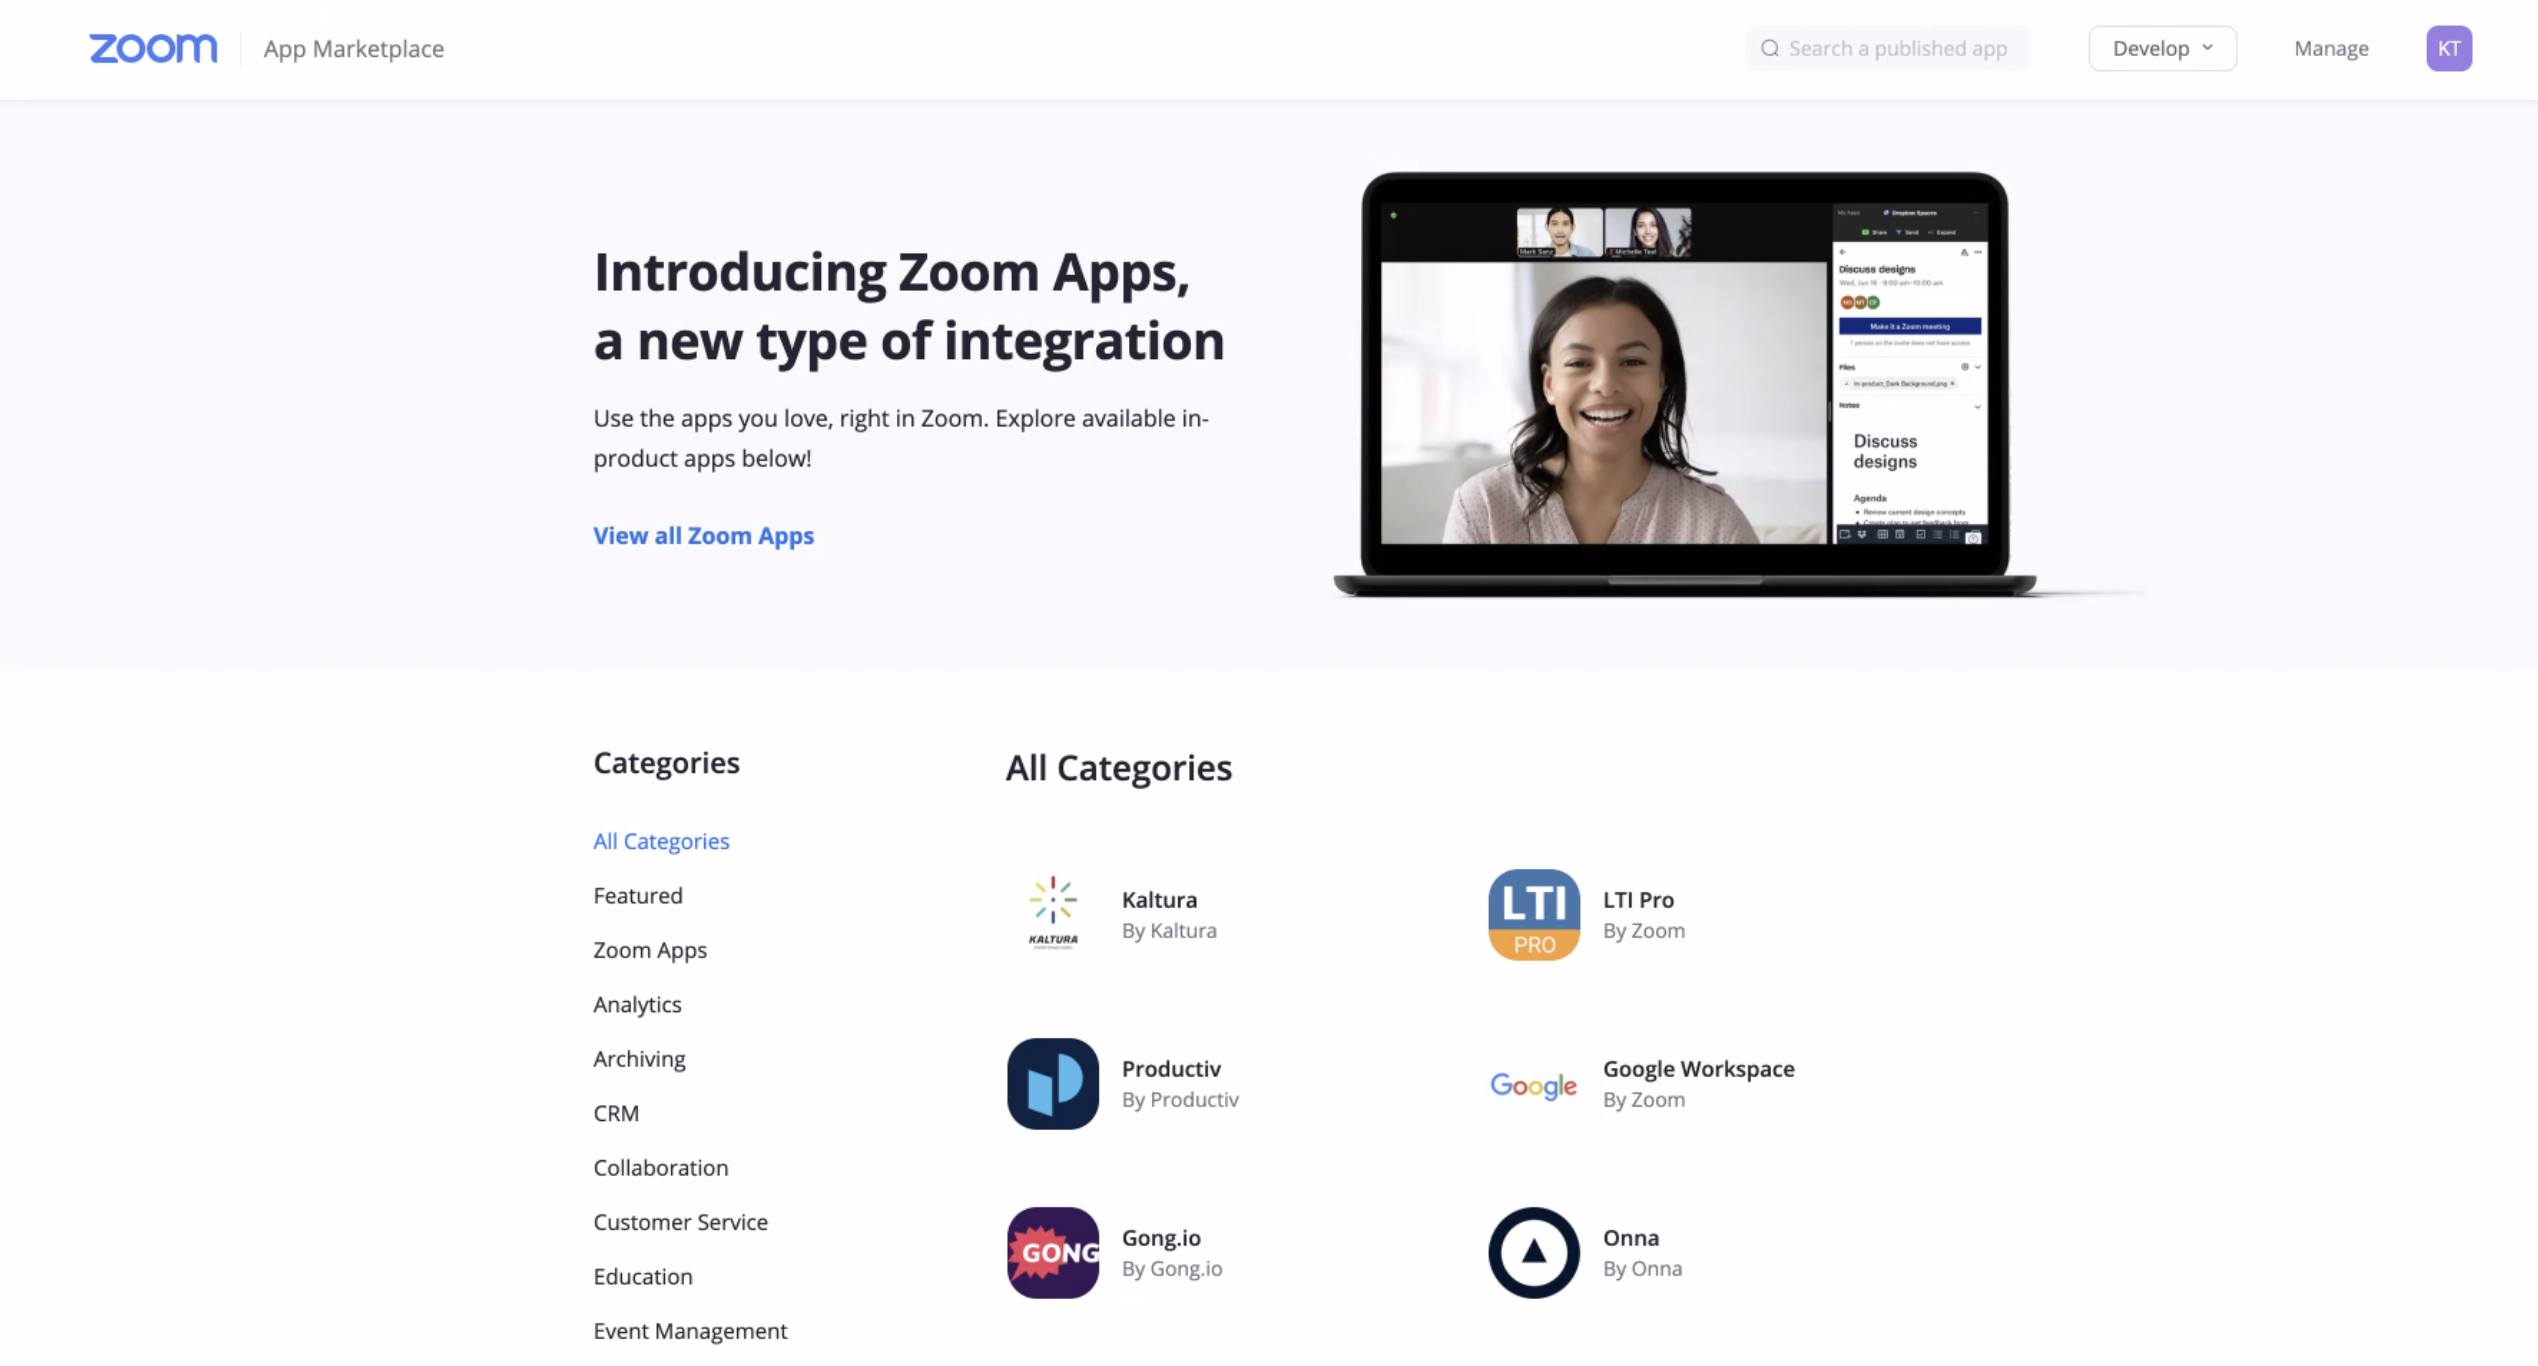 Zoom App Marketplace